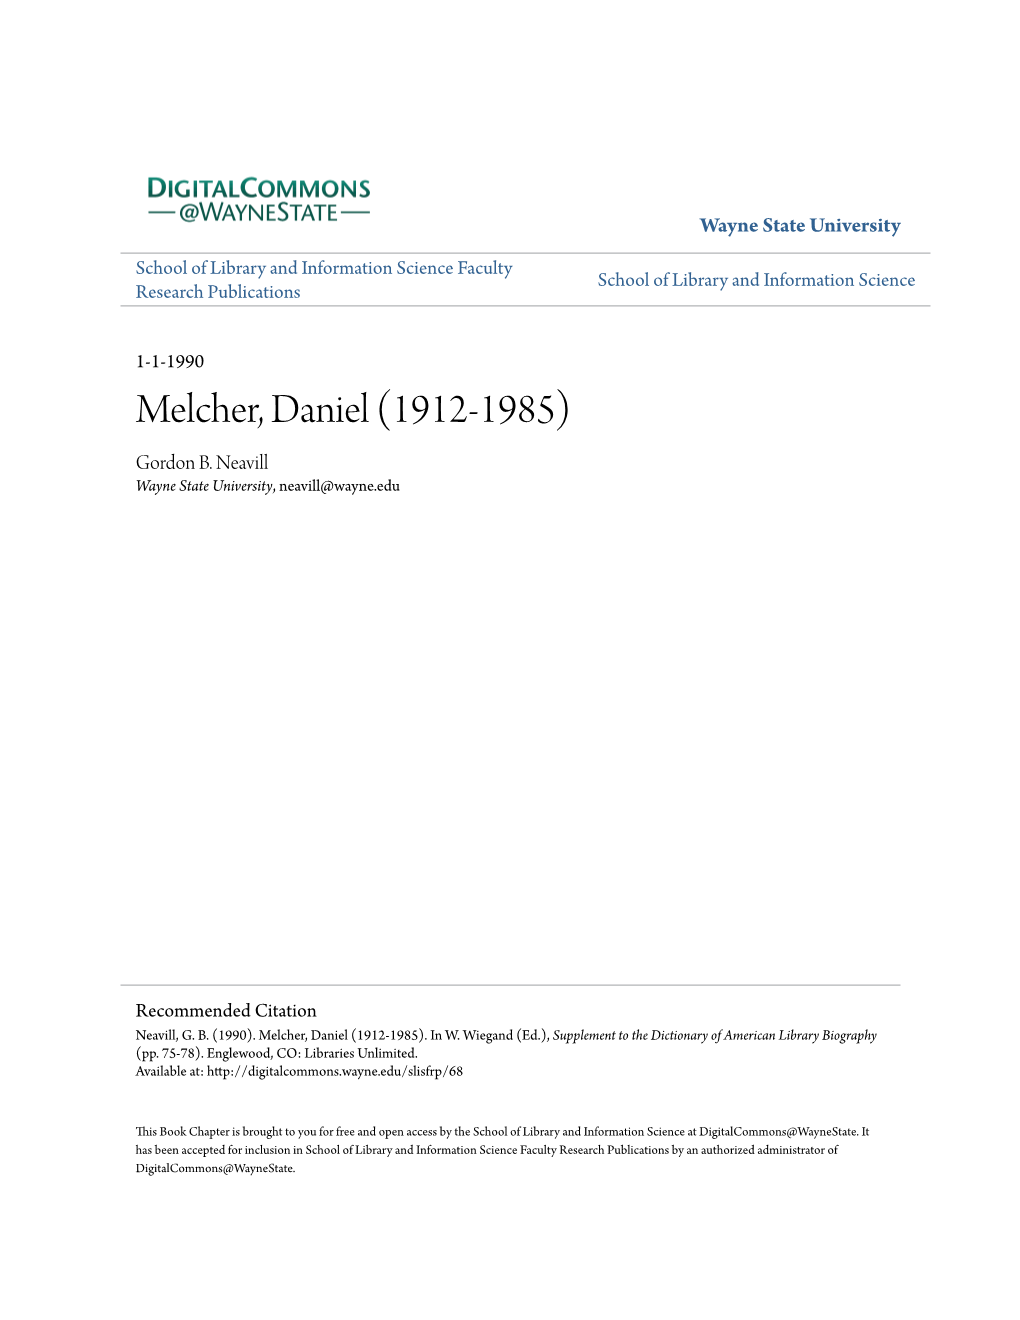 Melcher, Daniel (1912-1985) Gordon B